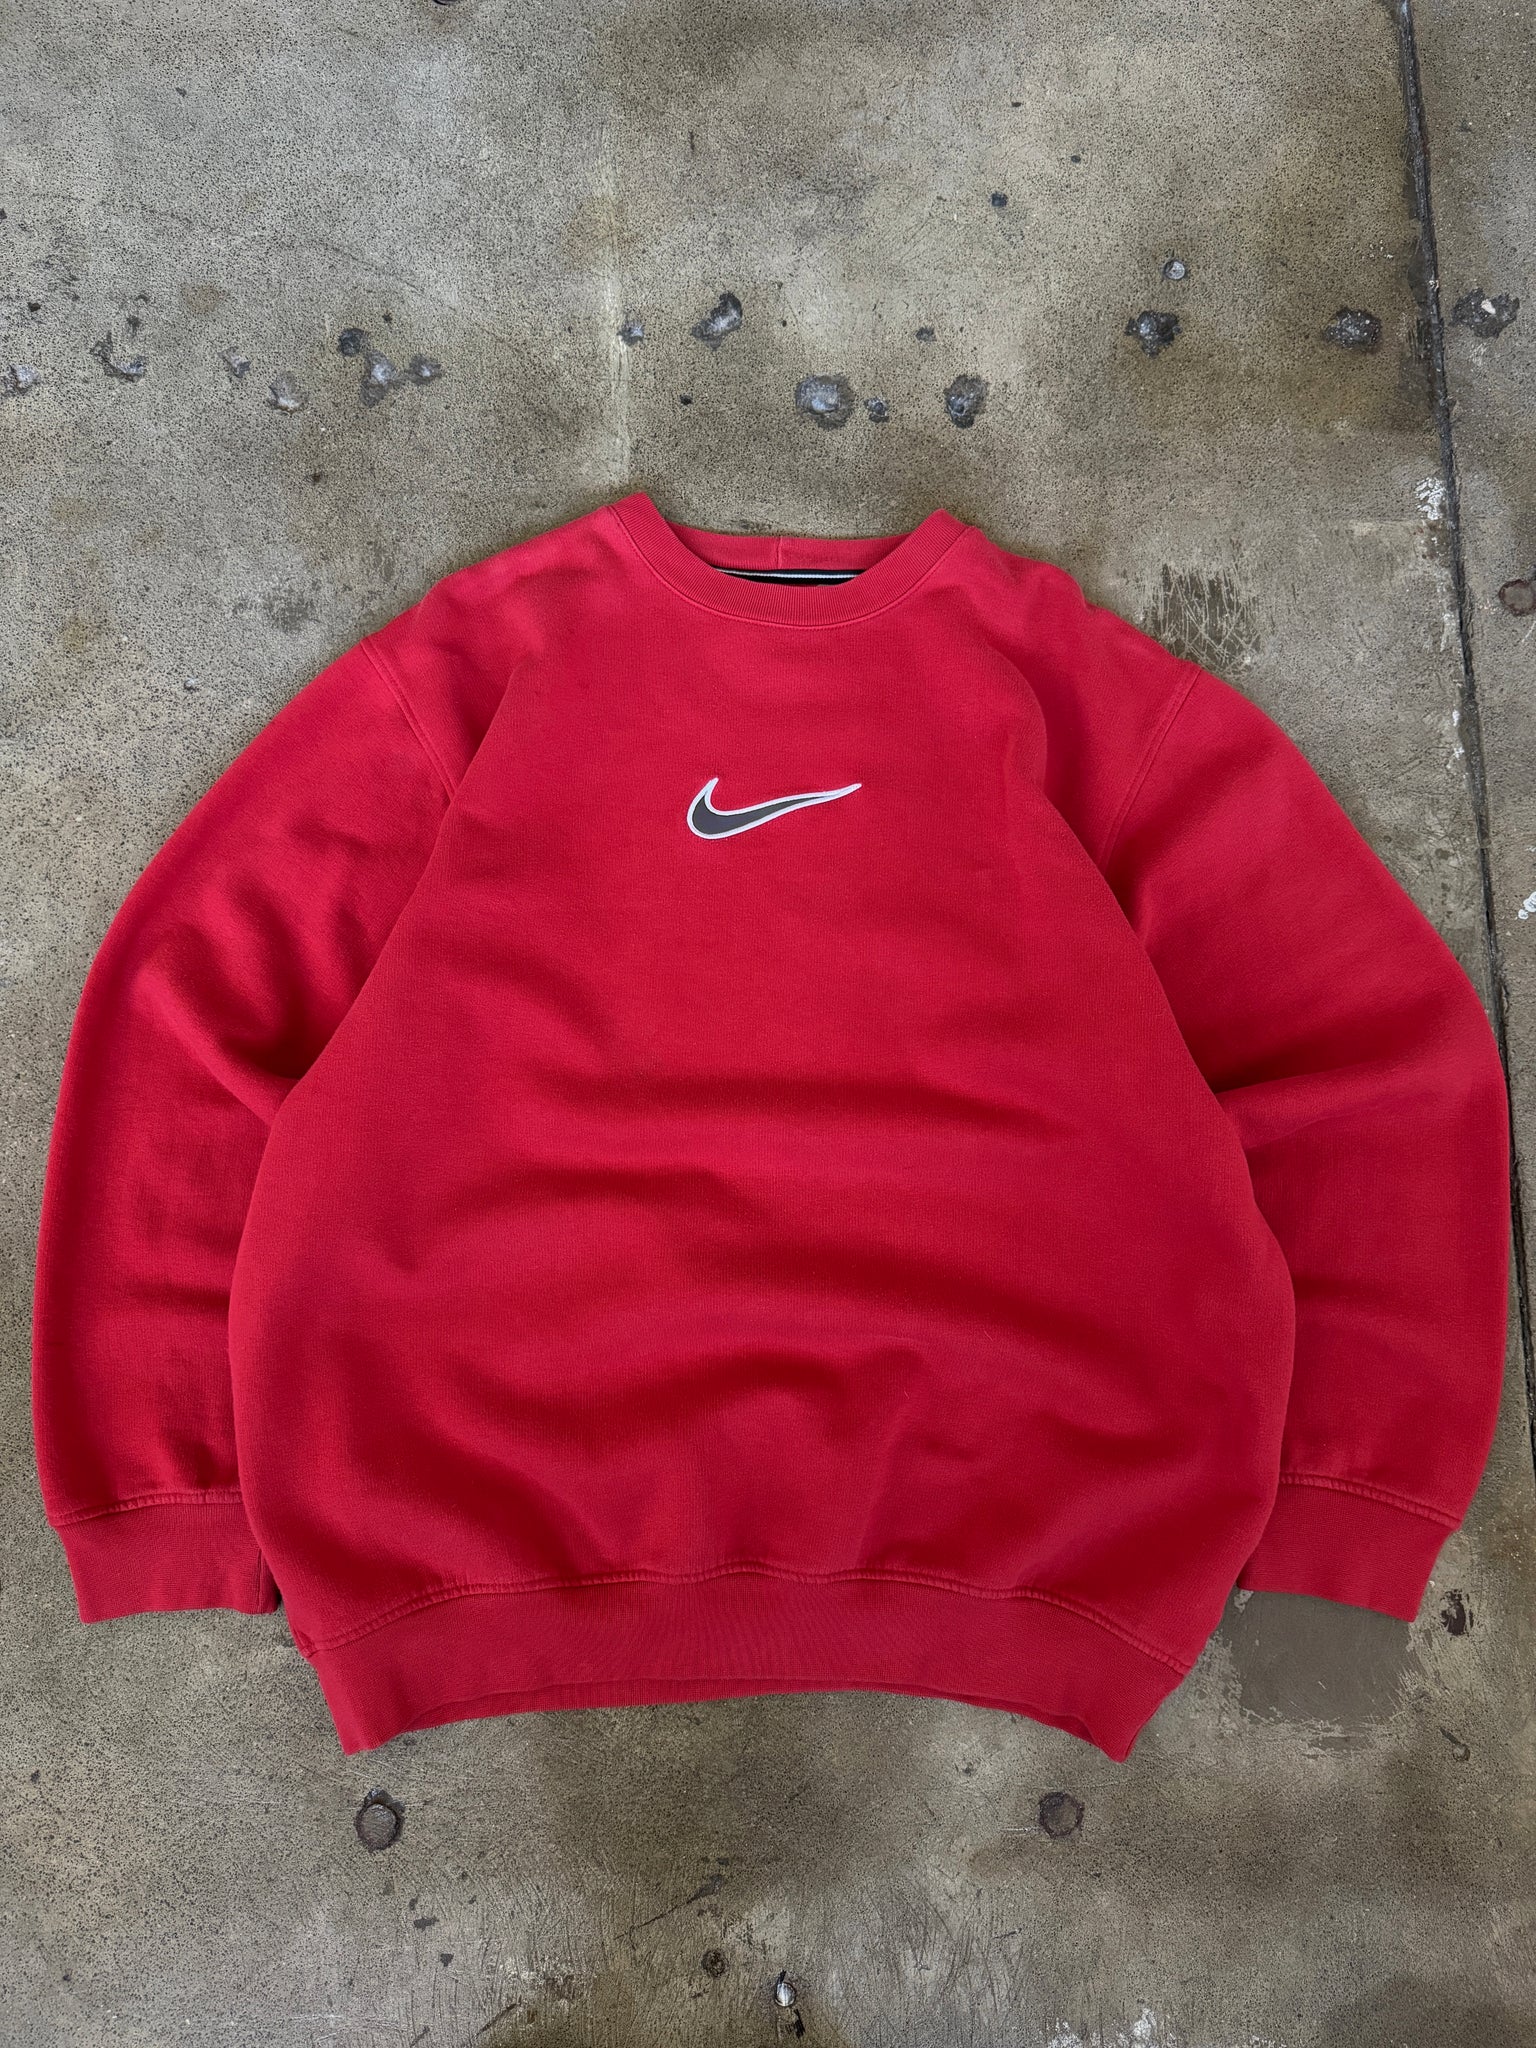 Vintage Nike Swoosh Sweatshirt (XL)